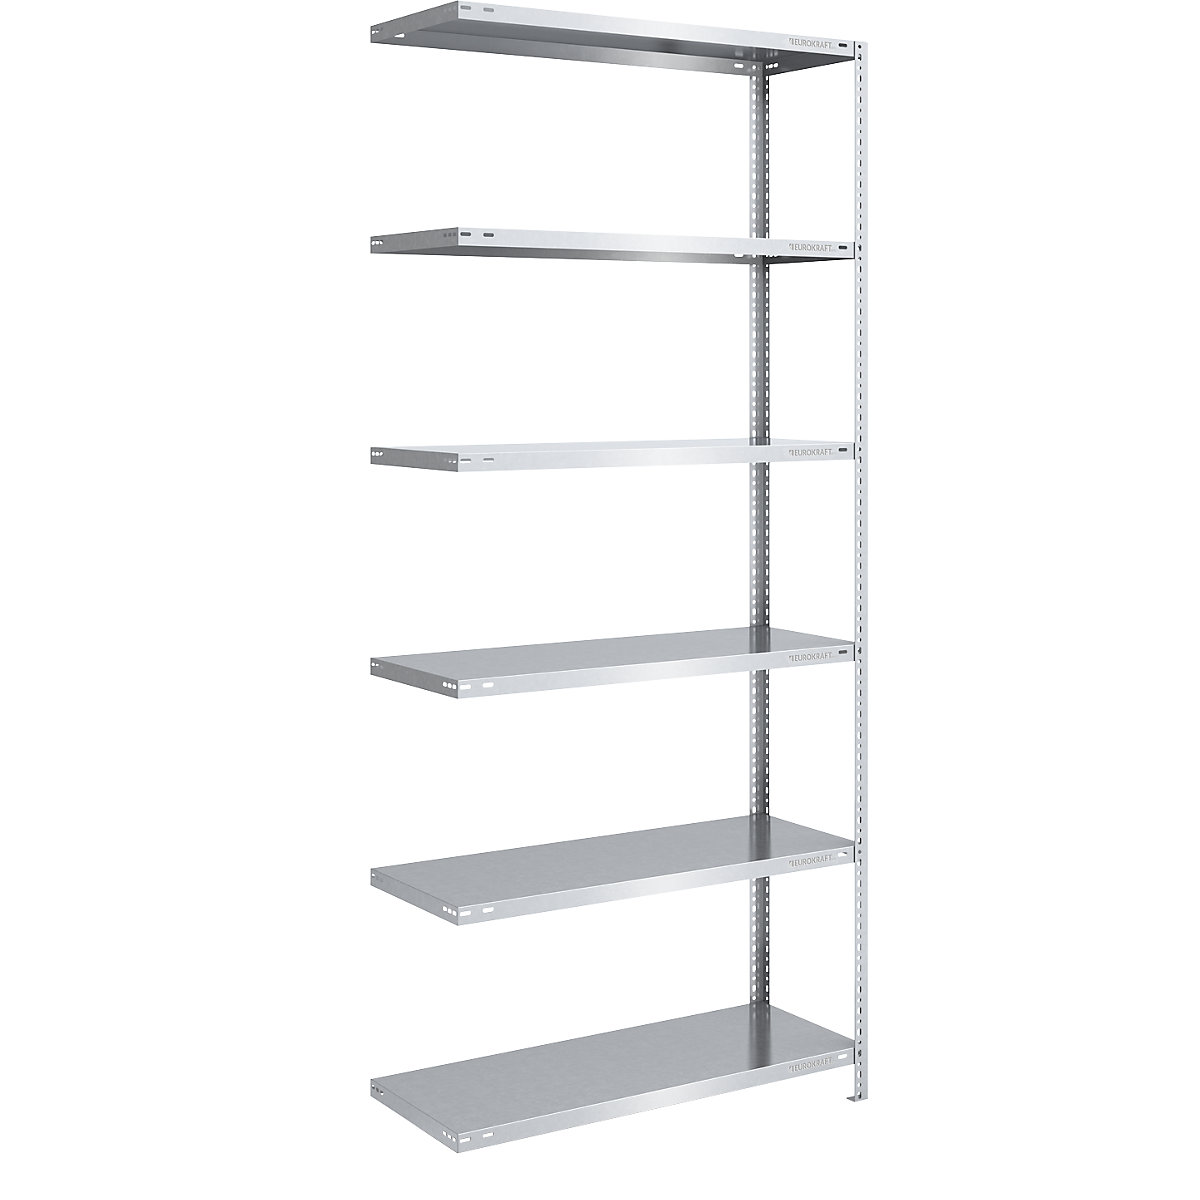 Bolt-together storage shelving, zinc plated, medium duty – eurokraft pro, shelf unit height 2500 mm, shelf width 1000 mm, depth 500 mm, extension shelf unit-8